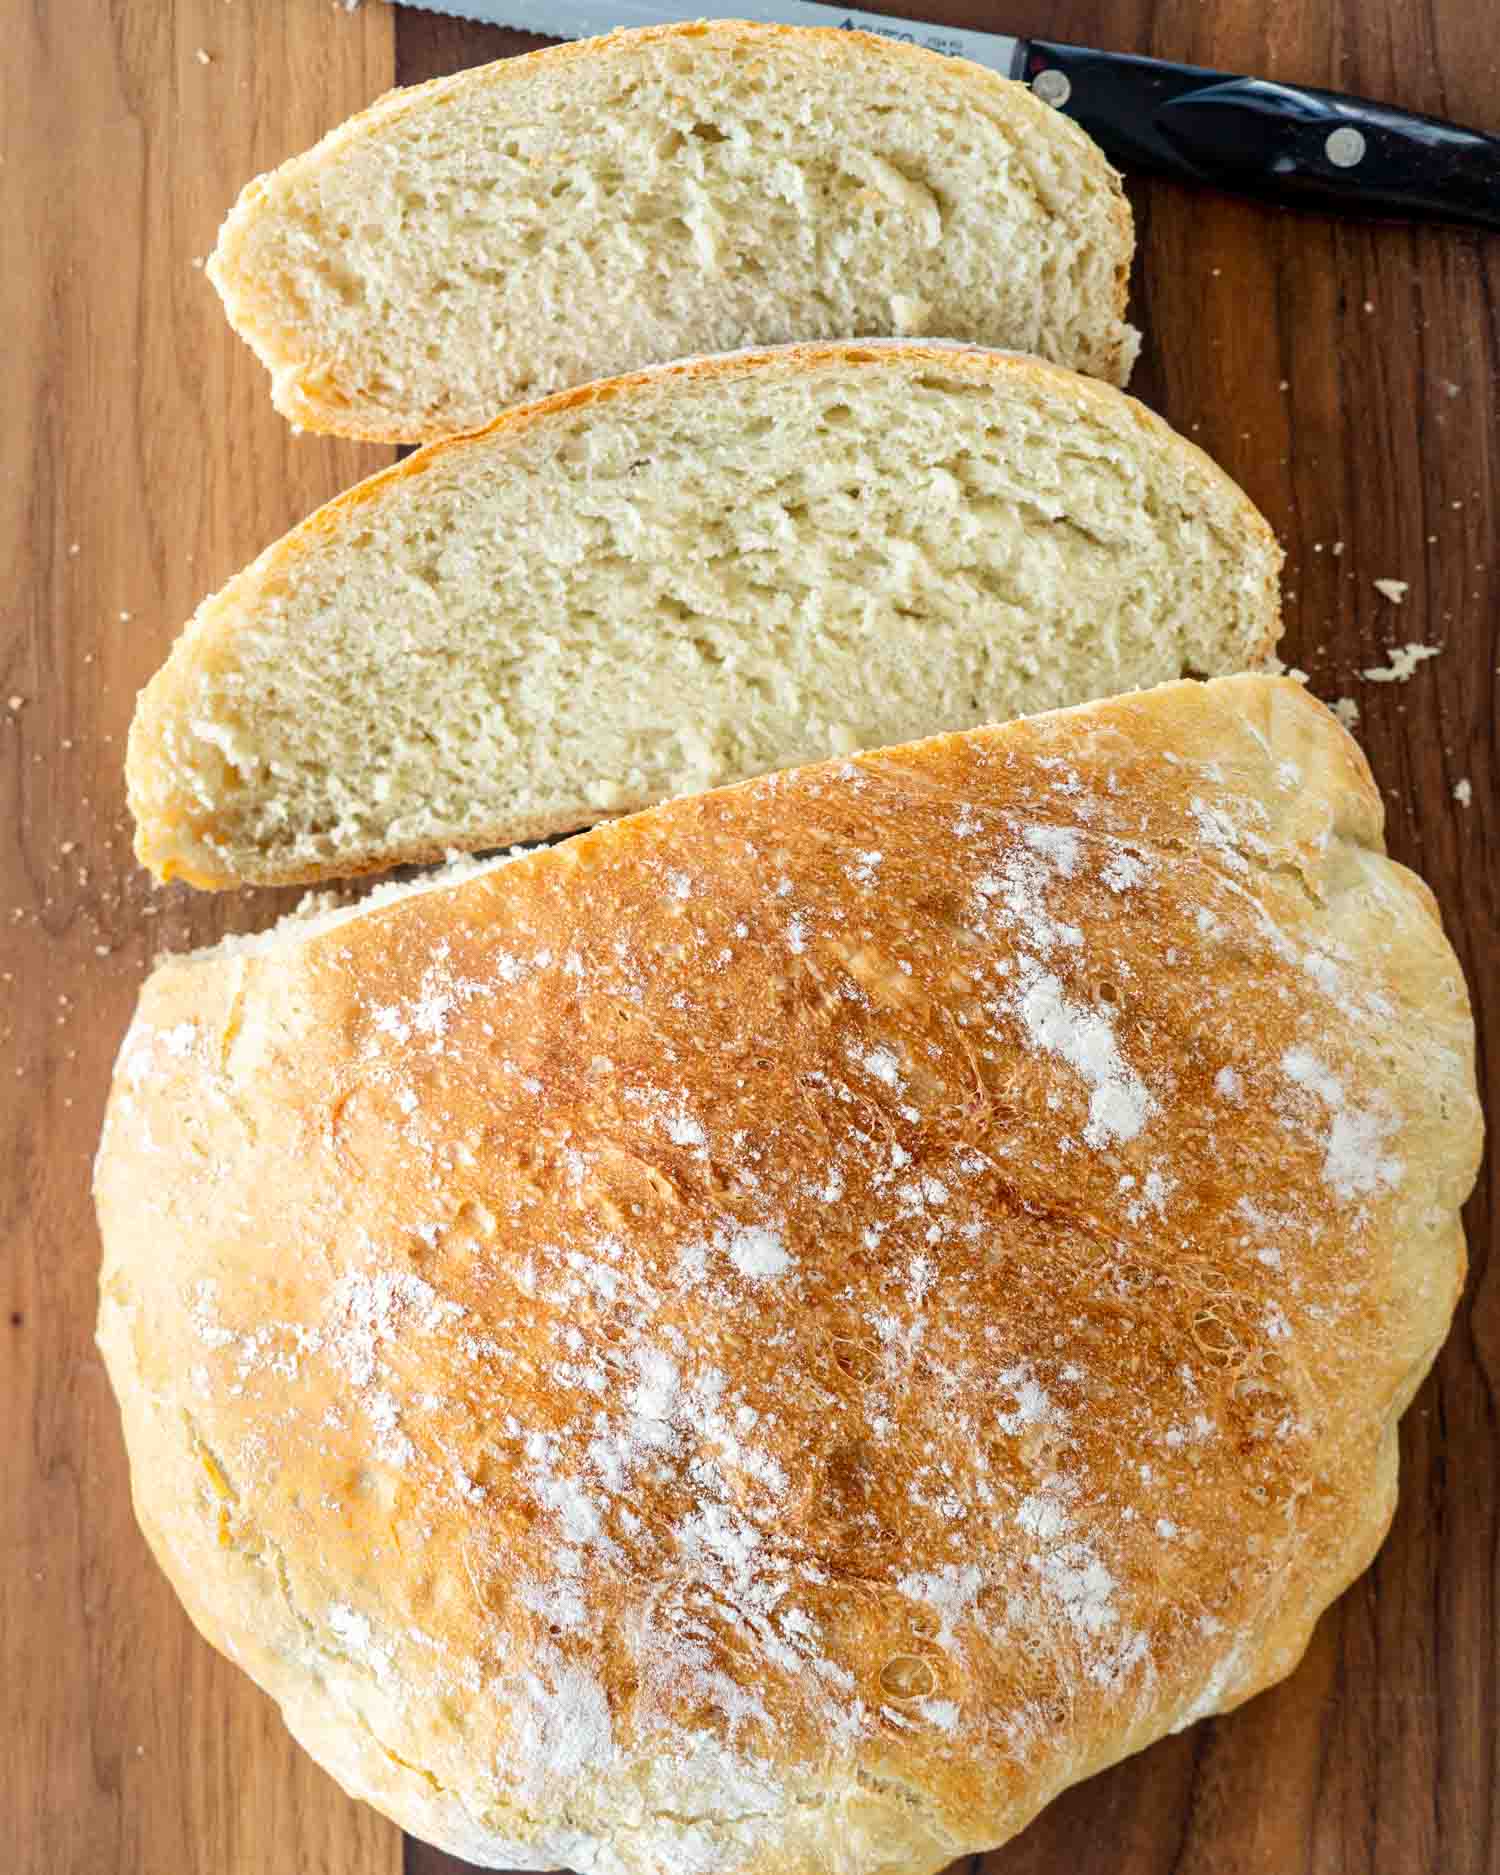 https://www.jocooks.com/wp-content/uploads/2019/01/fast-and-easy-no-knead-bread-1-3.jpg